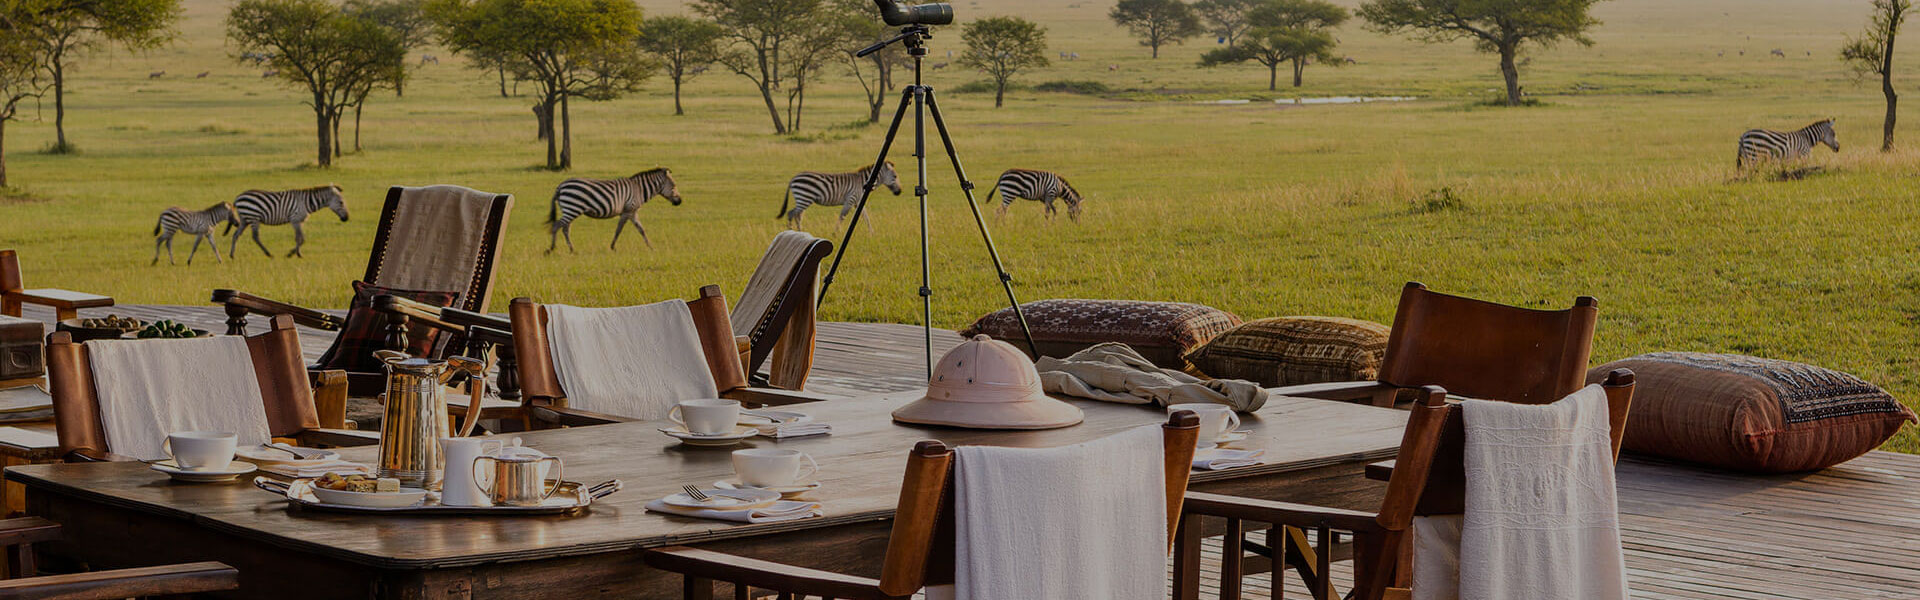 Luxury Serengeti safaris